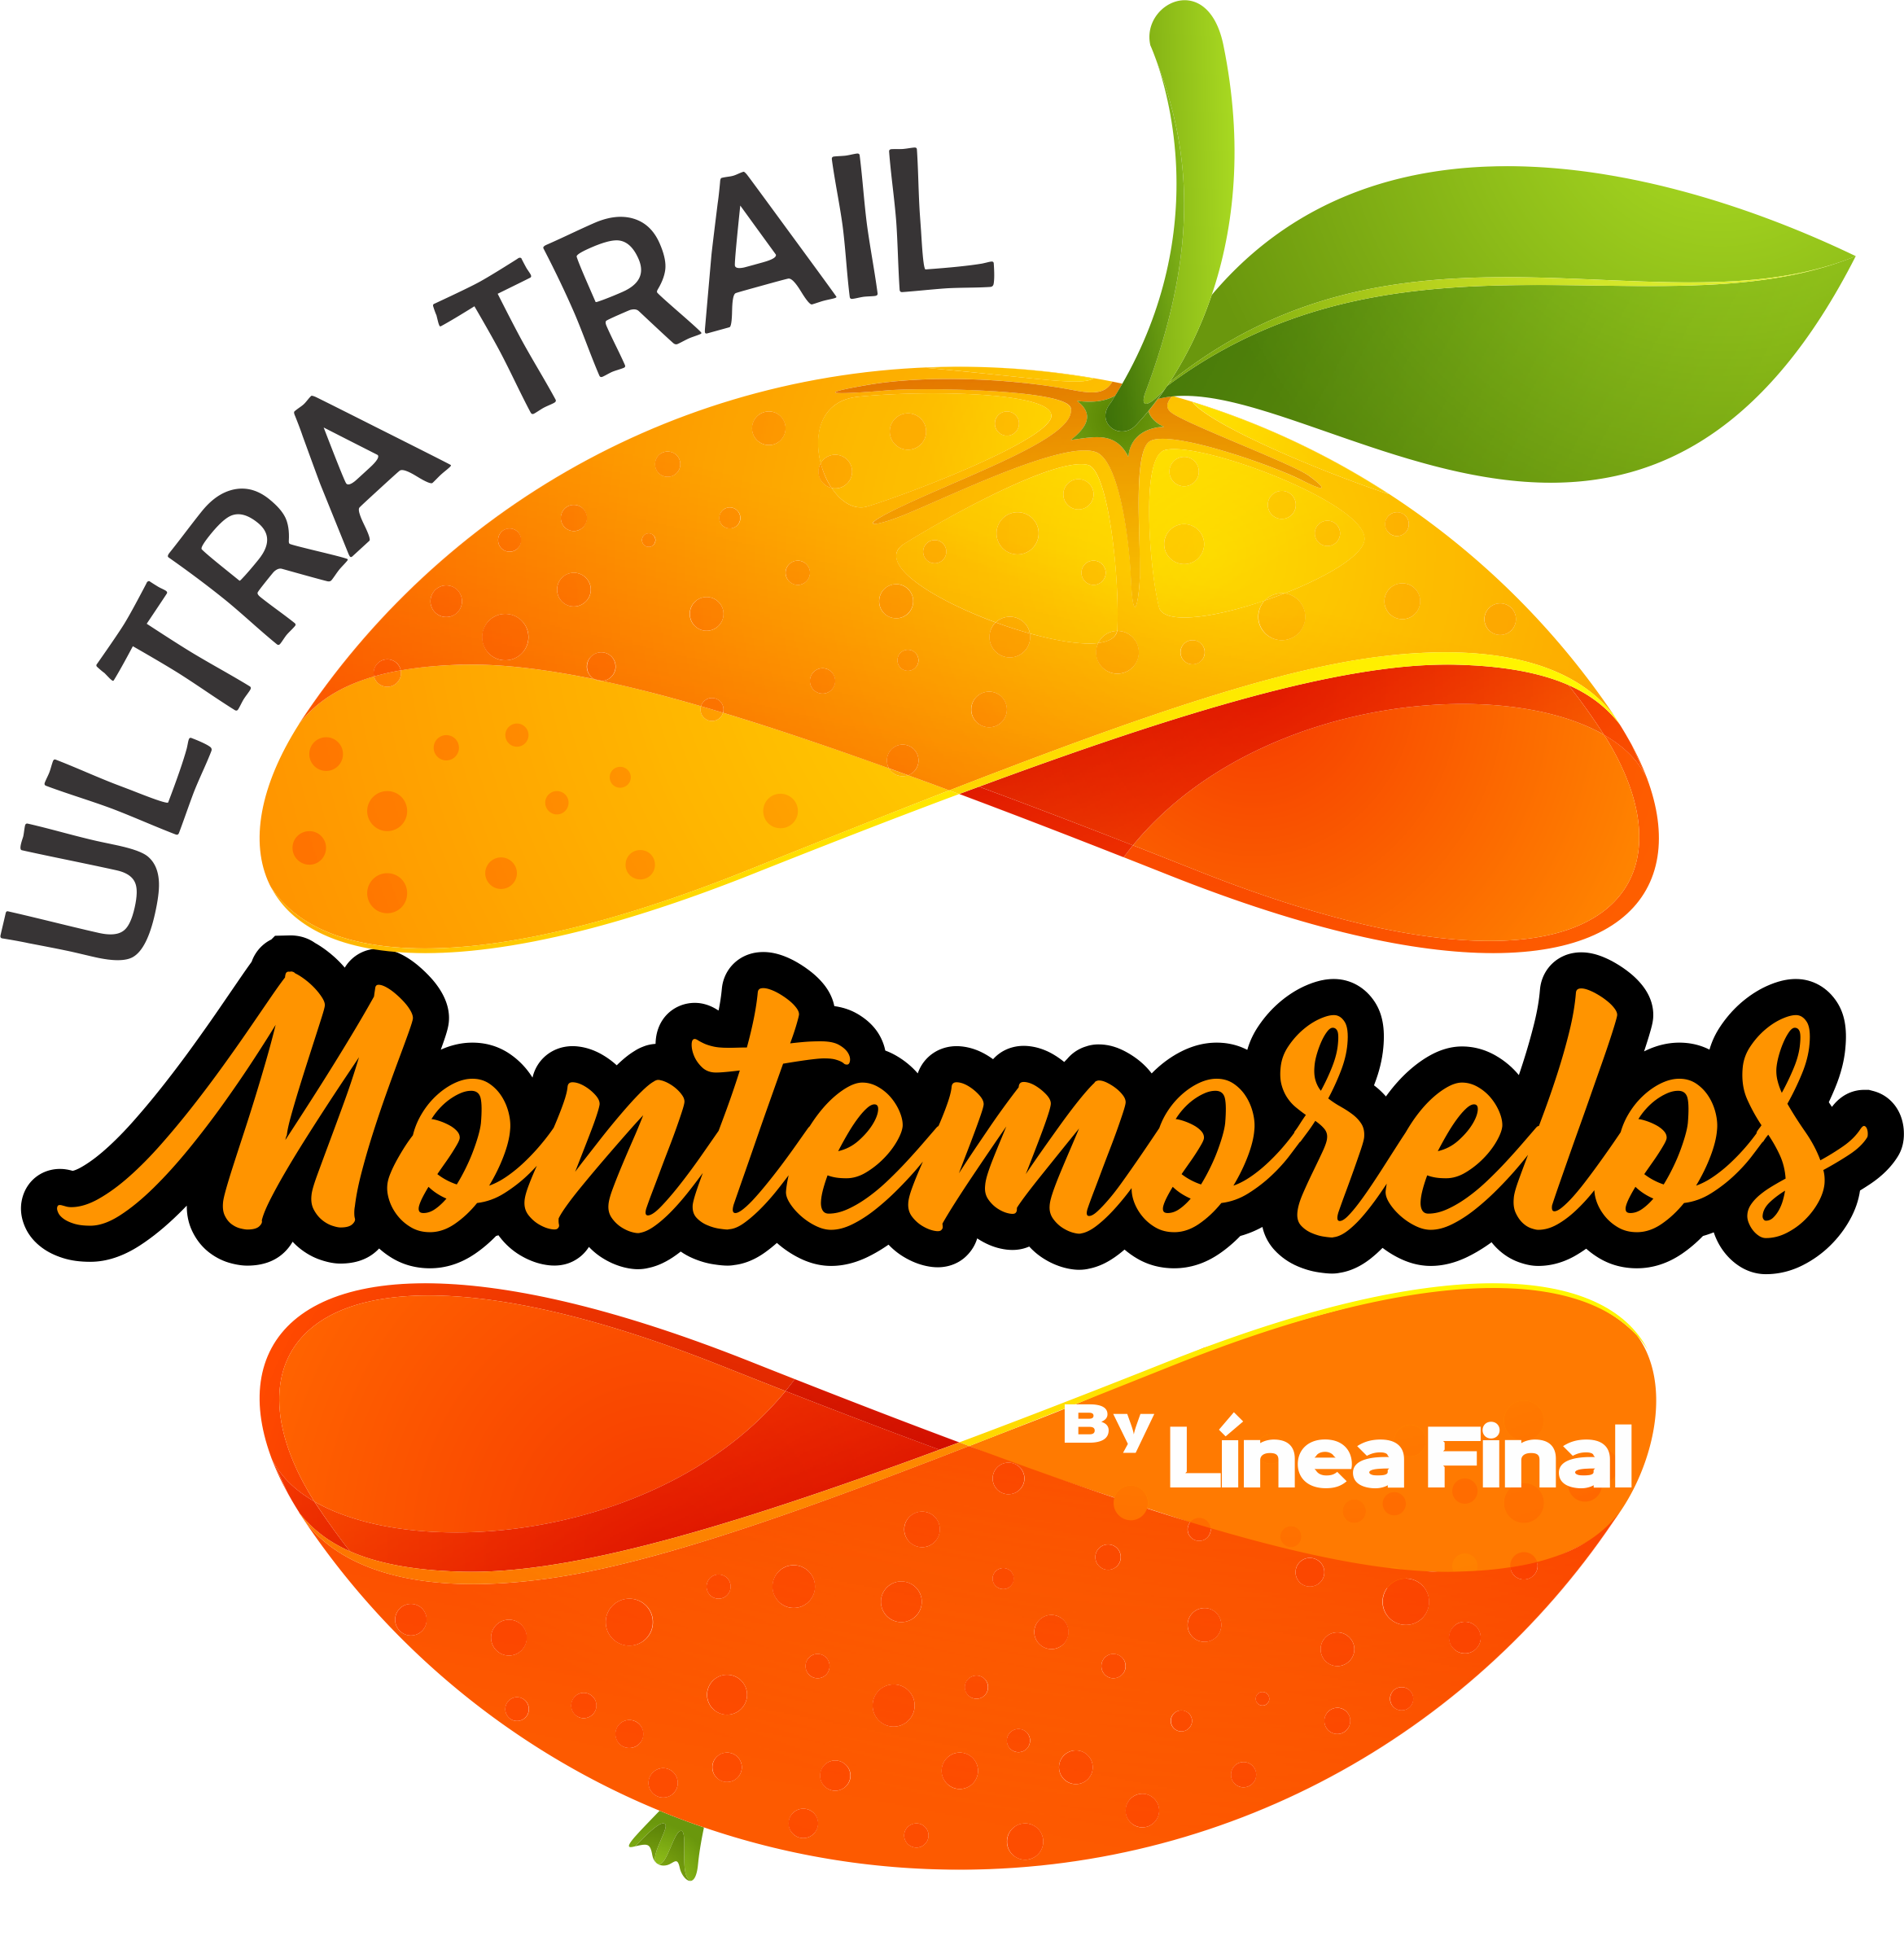 logo Ultra Trail Montemorelos